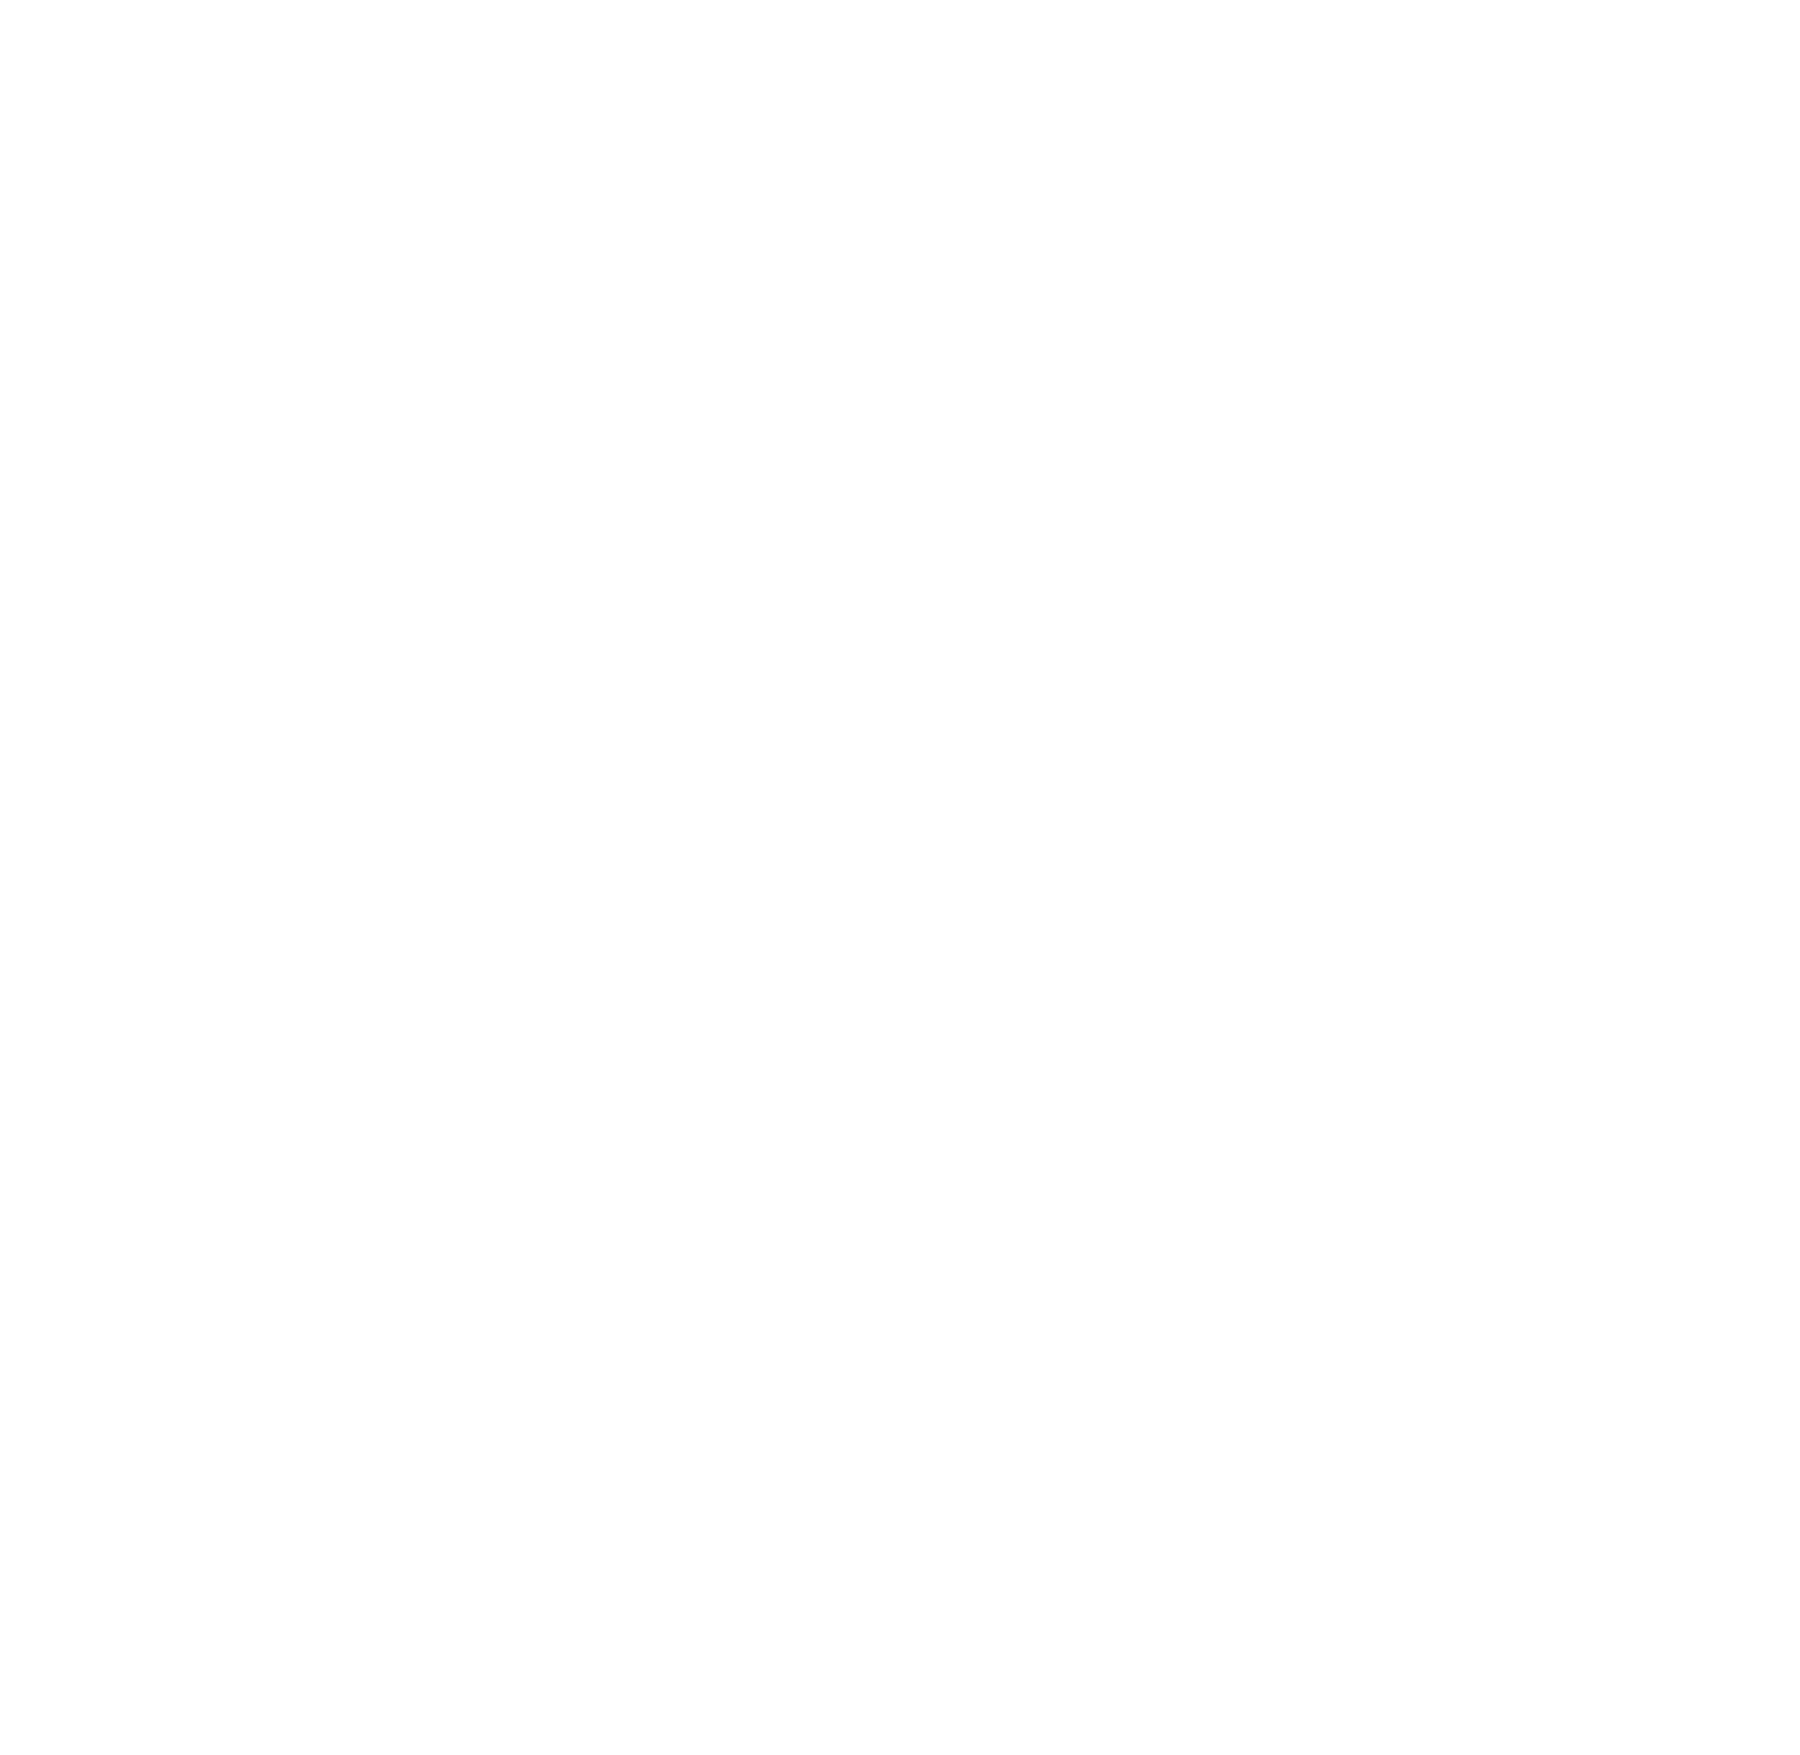 Away club logo